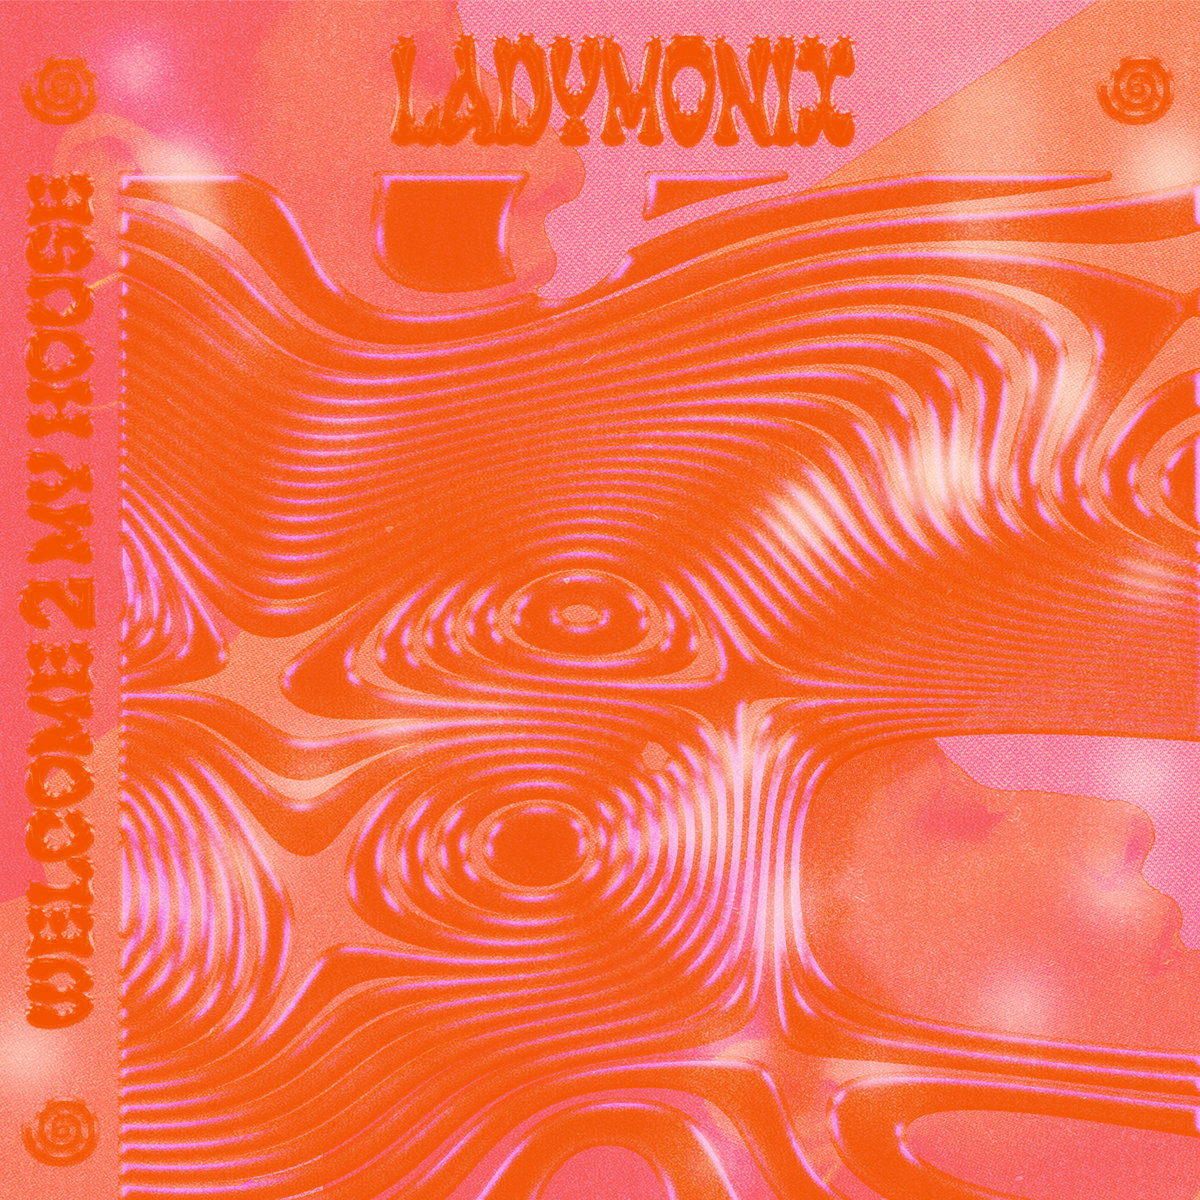 LadyMonix Welcome 2 My House album artwork